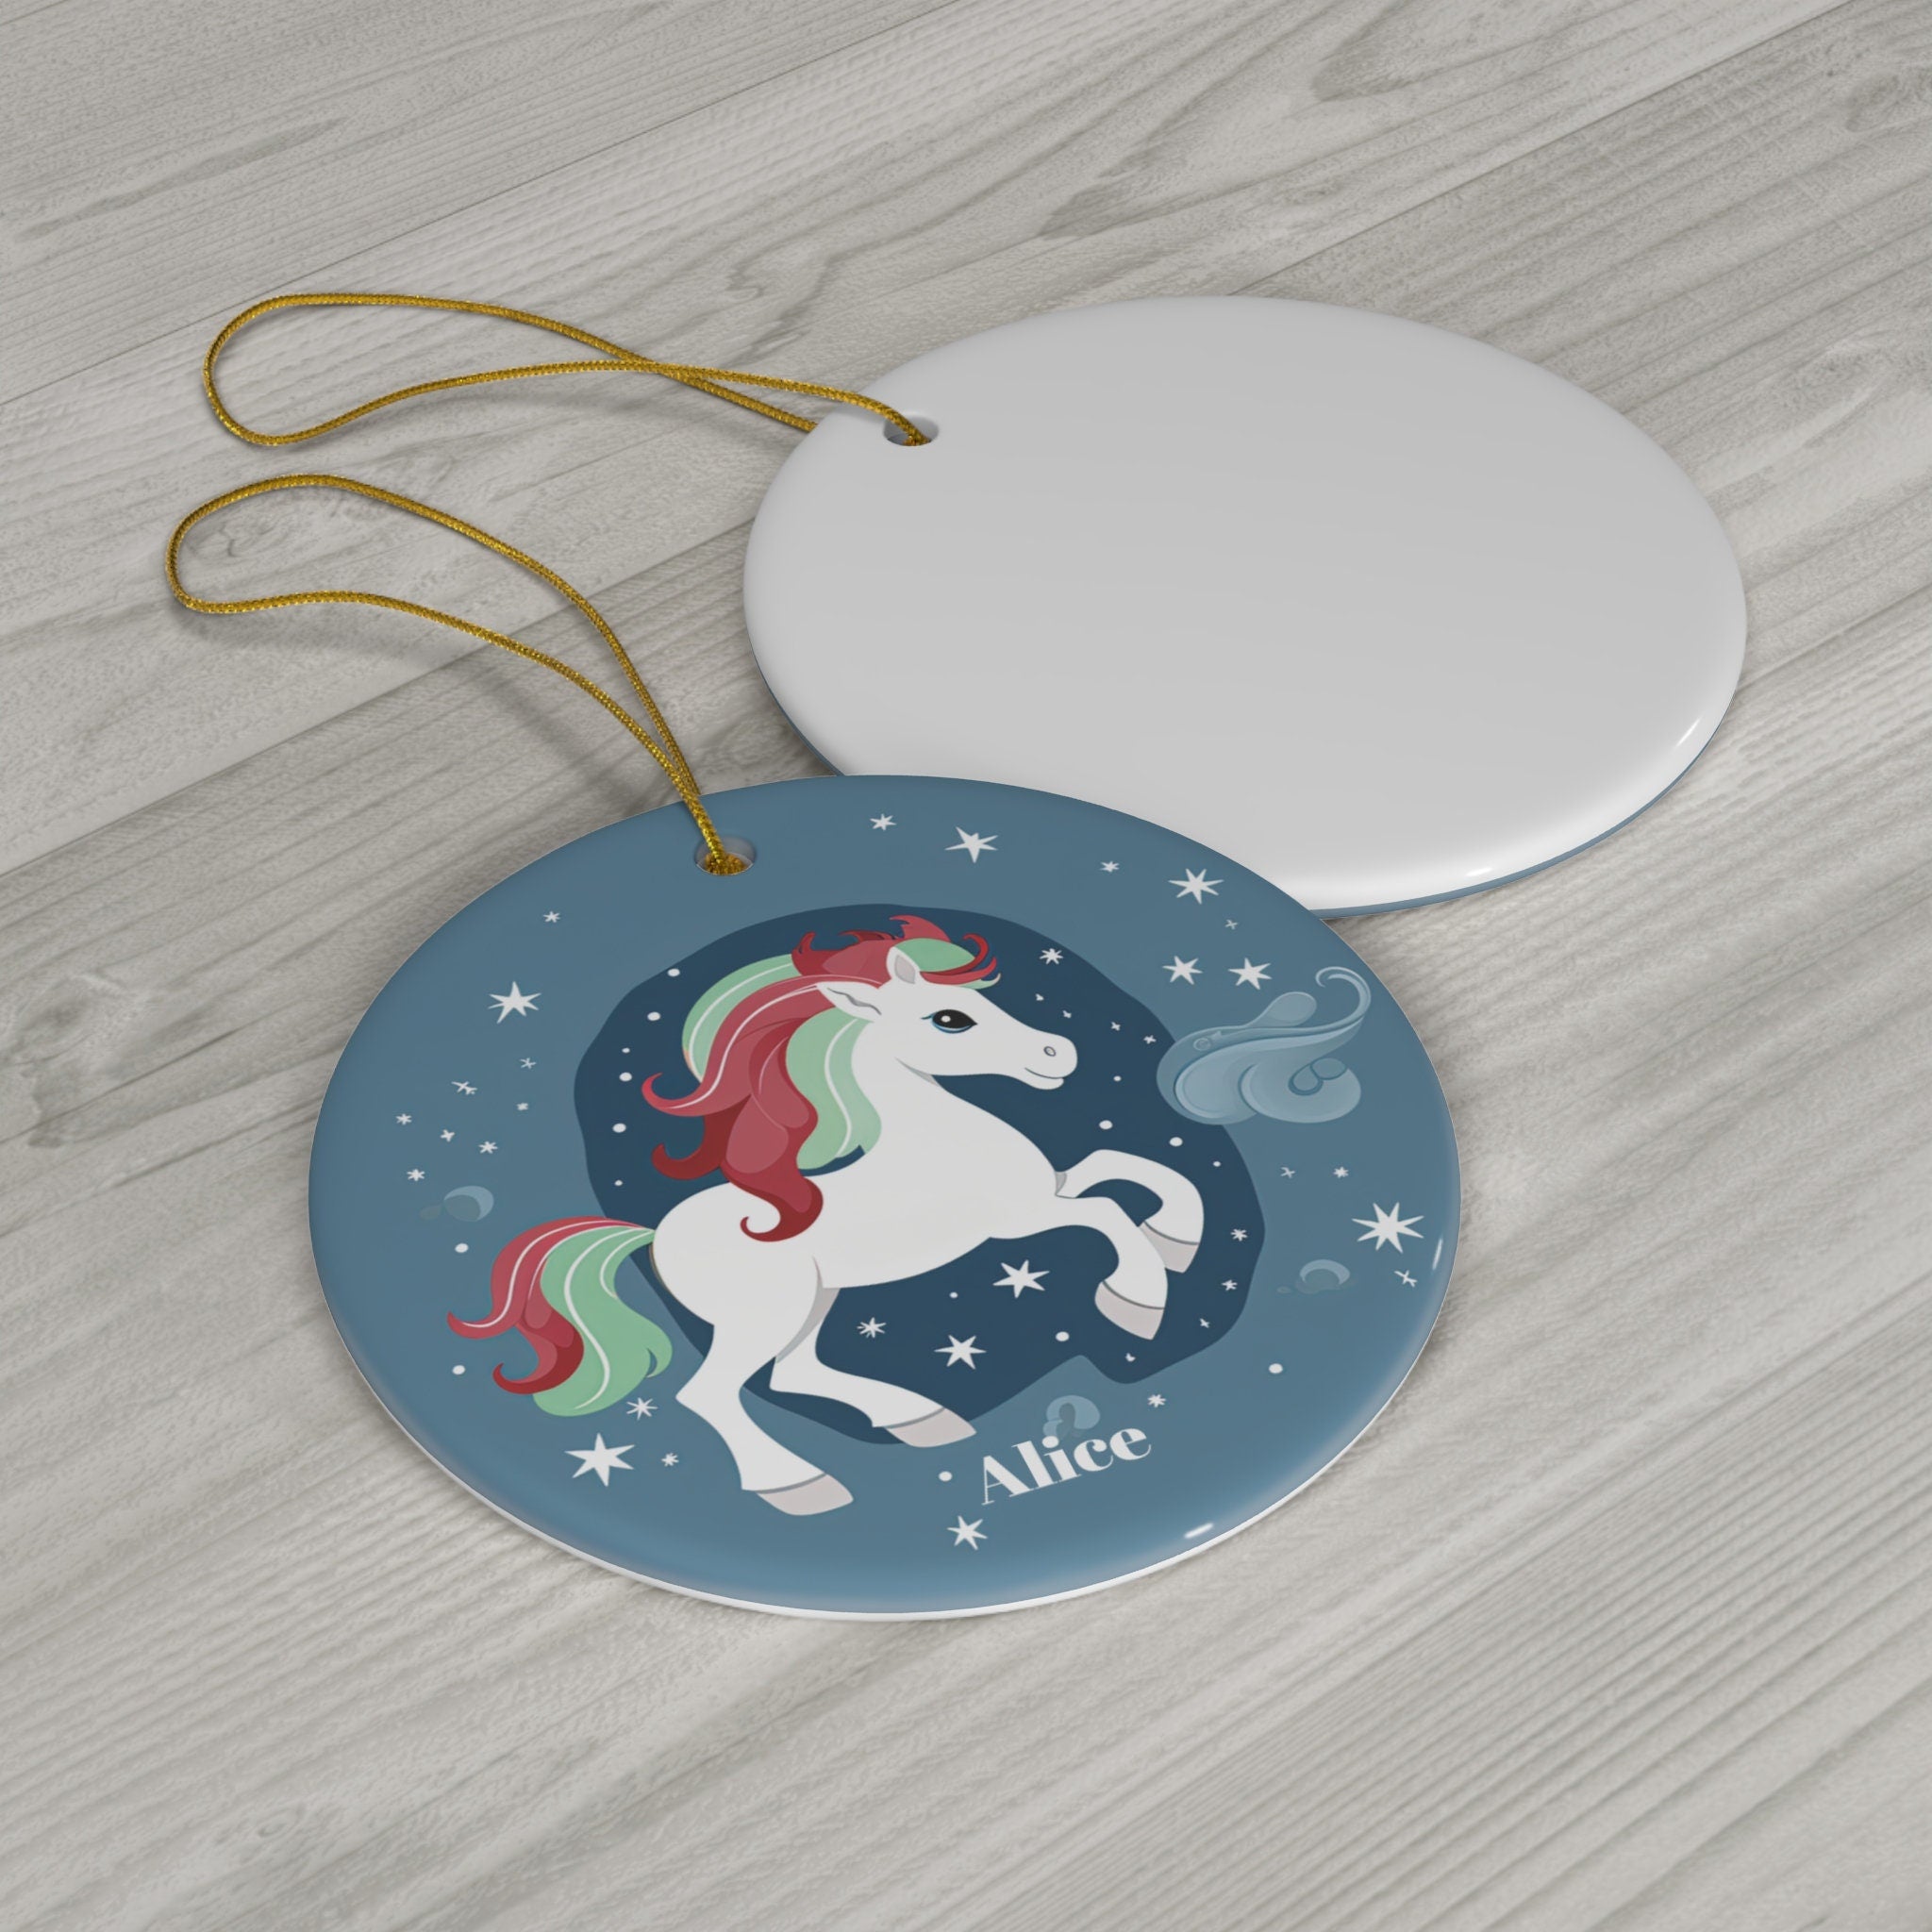 Personalized Cute Horse Ornament